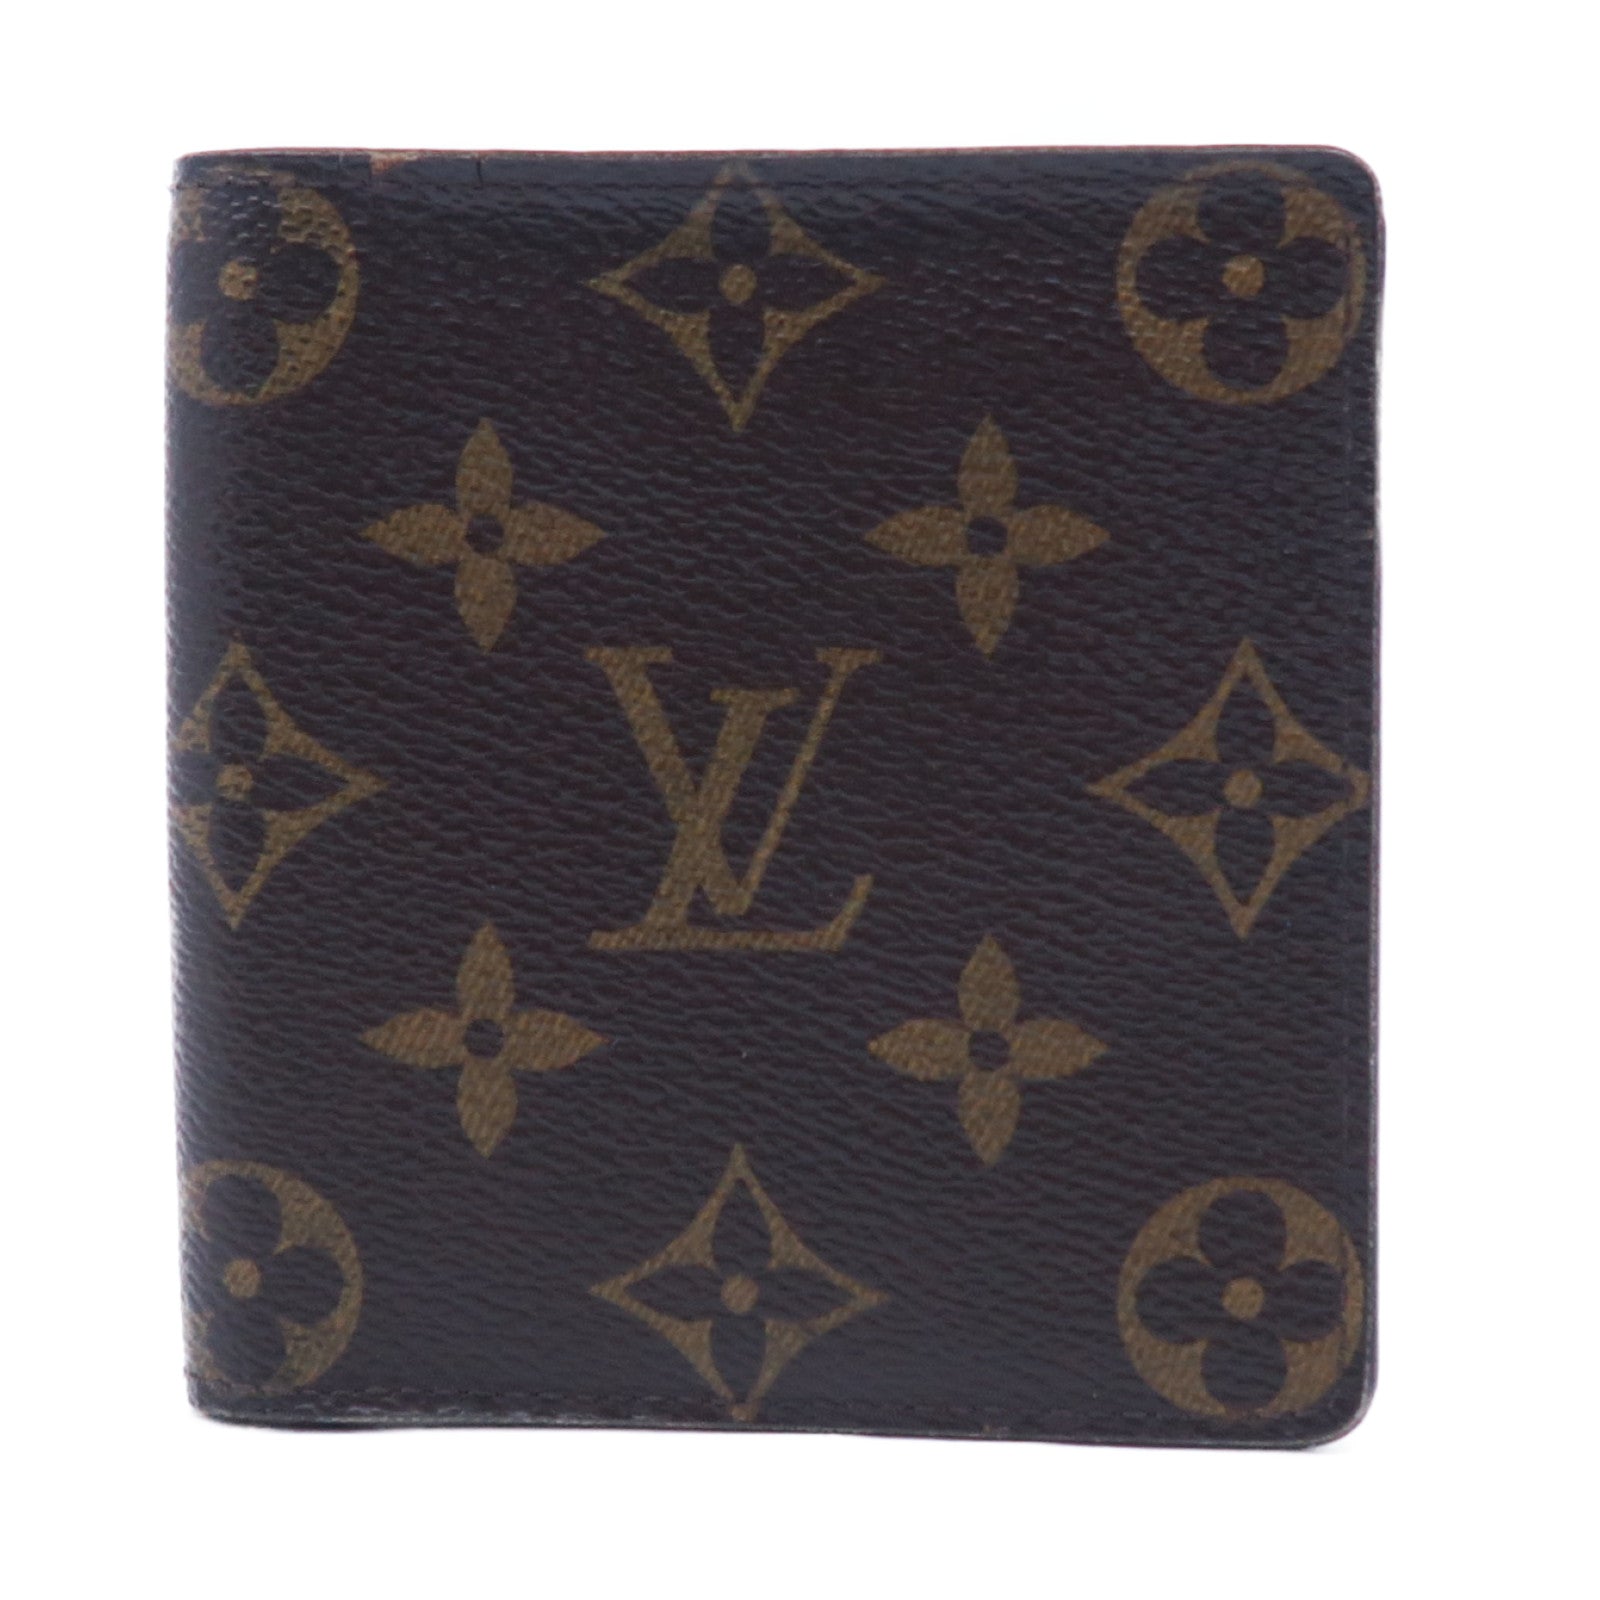 Louis+Vuitton+M60929+Credit+Card+Slots+Wallet+-+Brown for sale online